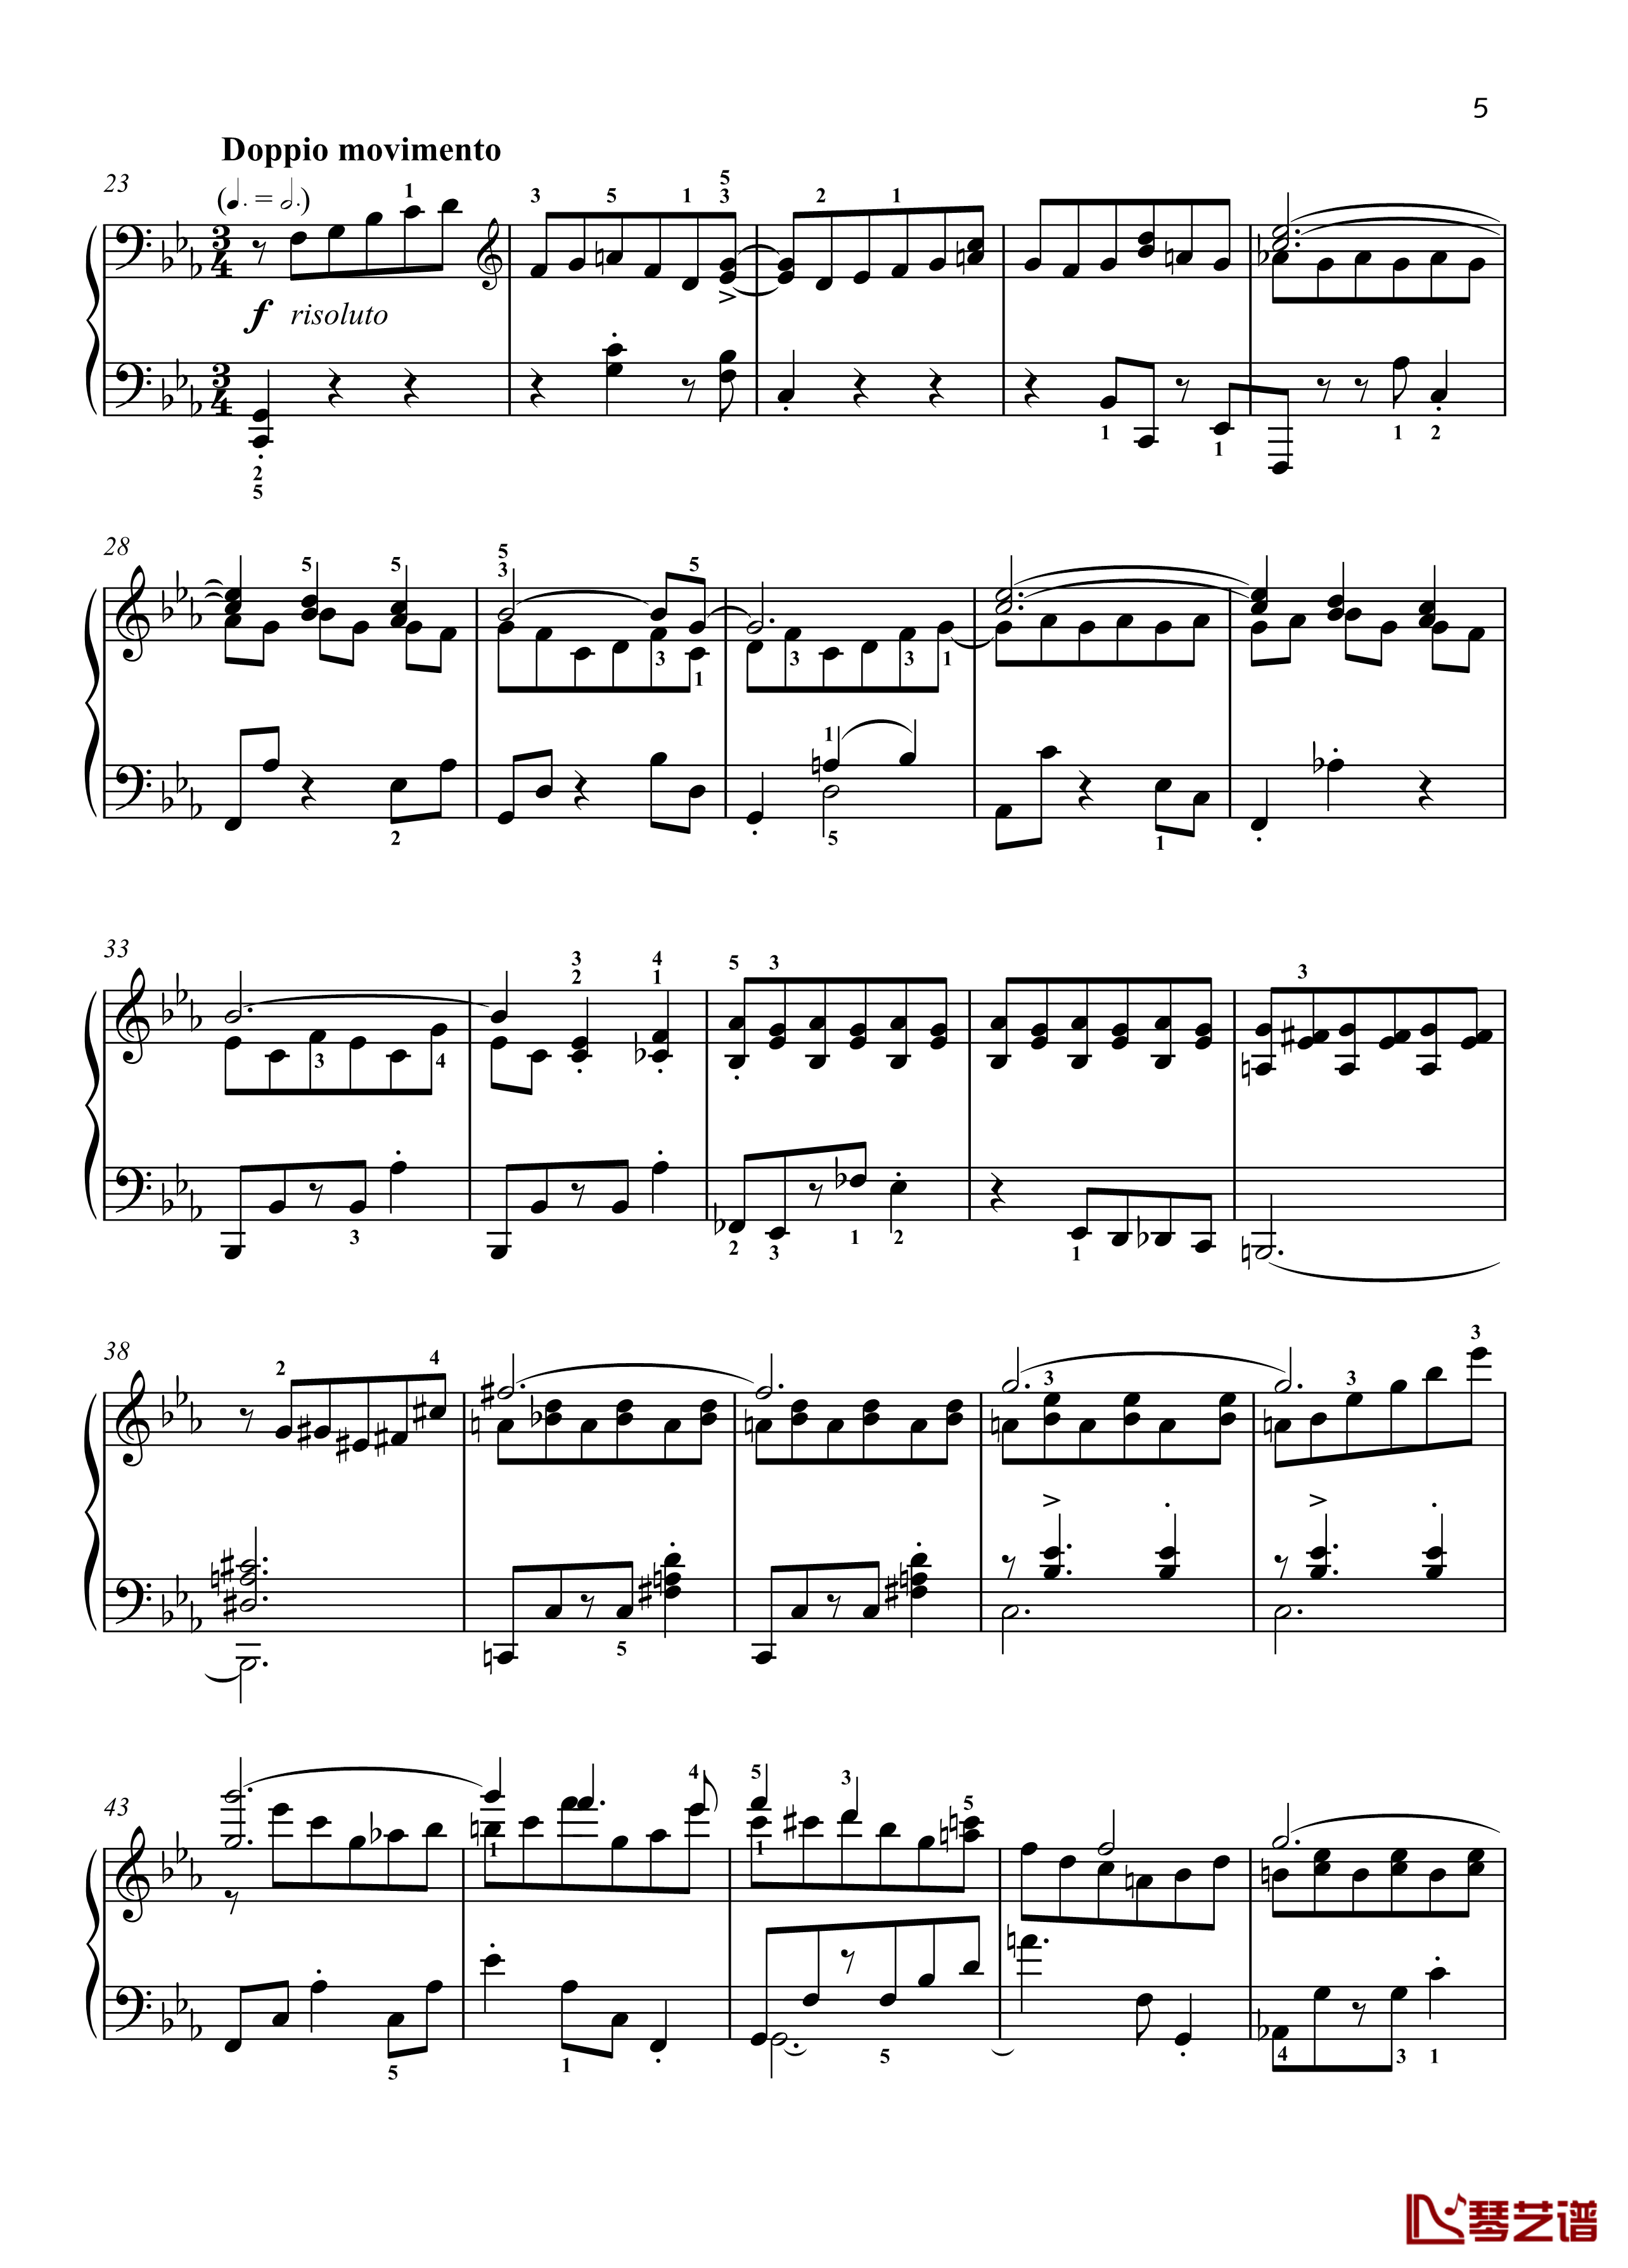 No. 2. Dream. Moderato钢琴谱-带指法- 八首音乐会练习曲 Eight Concert ?tudes Op 40 -爵士-尼古拉·凯帕斯汀5